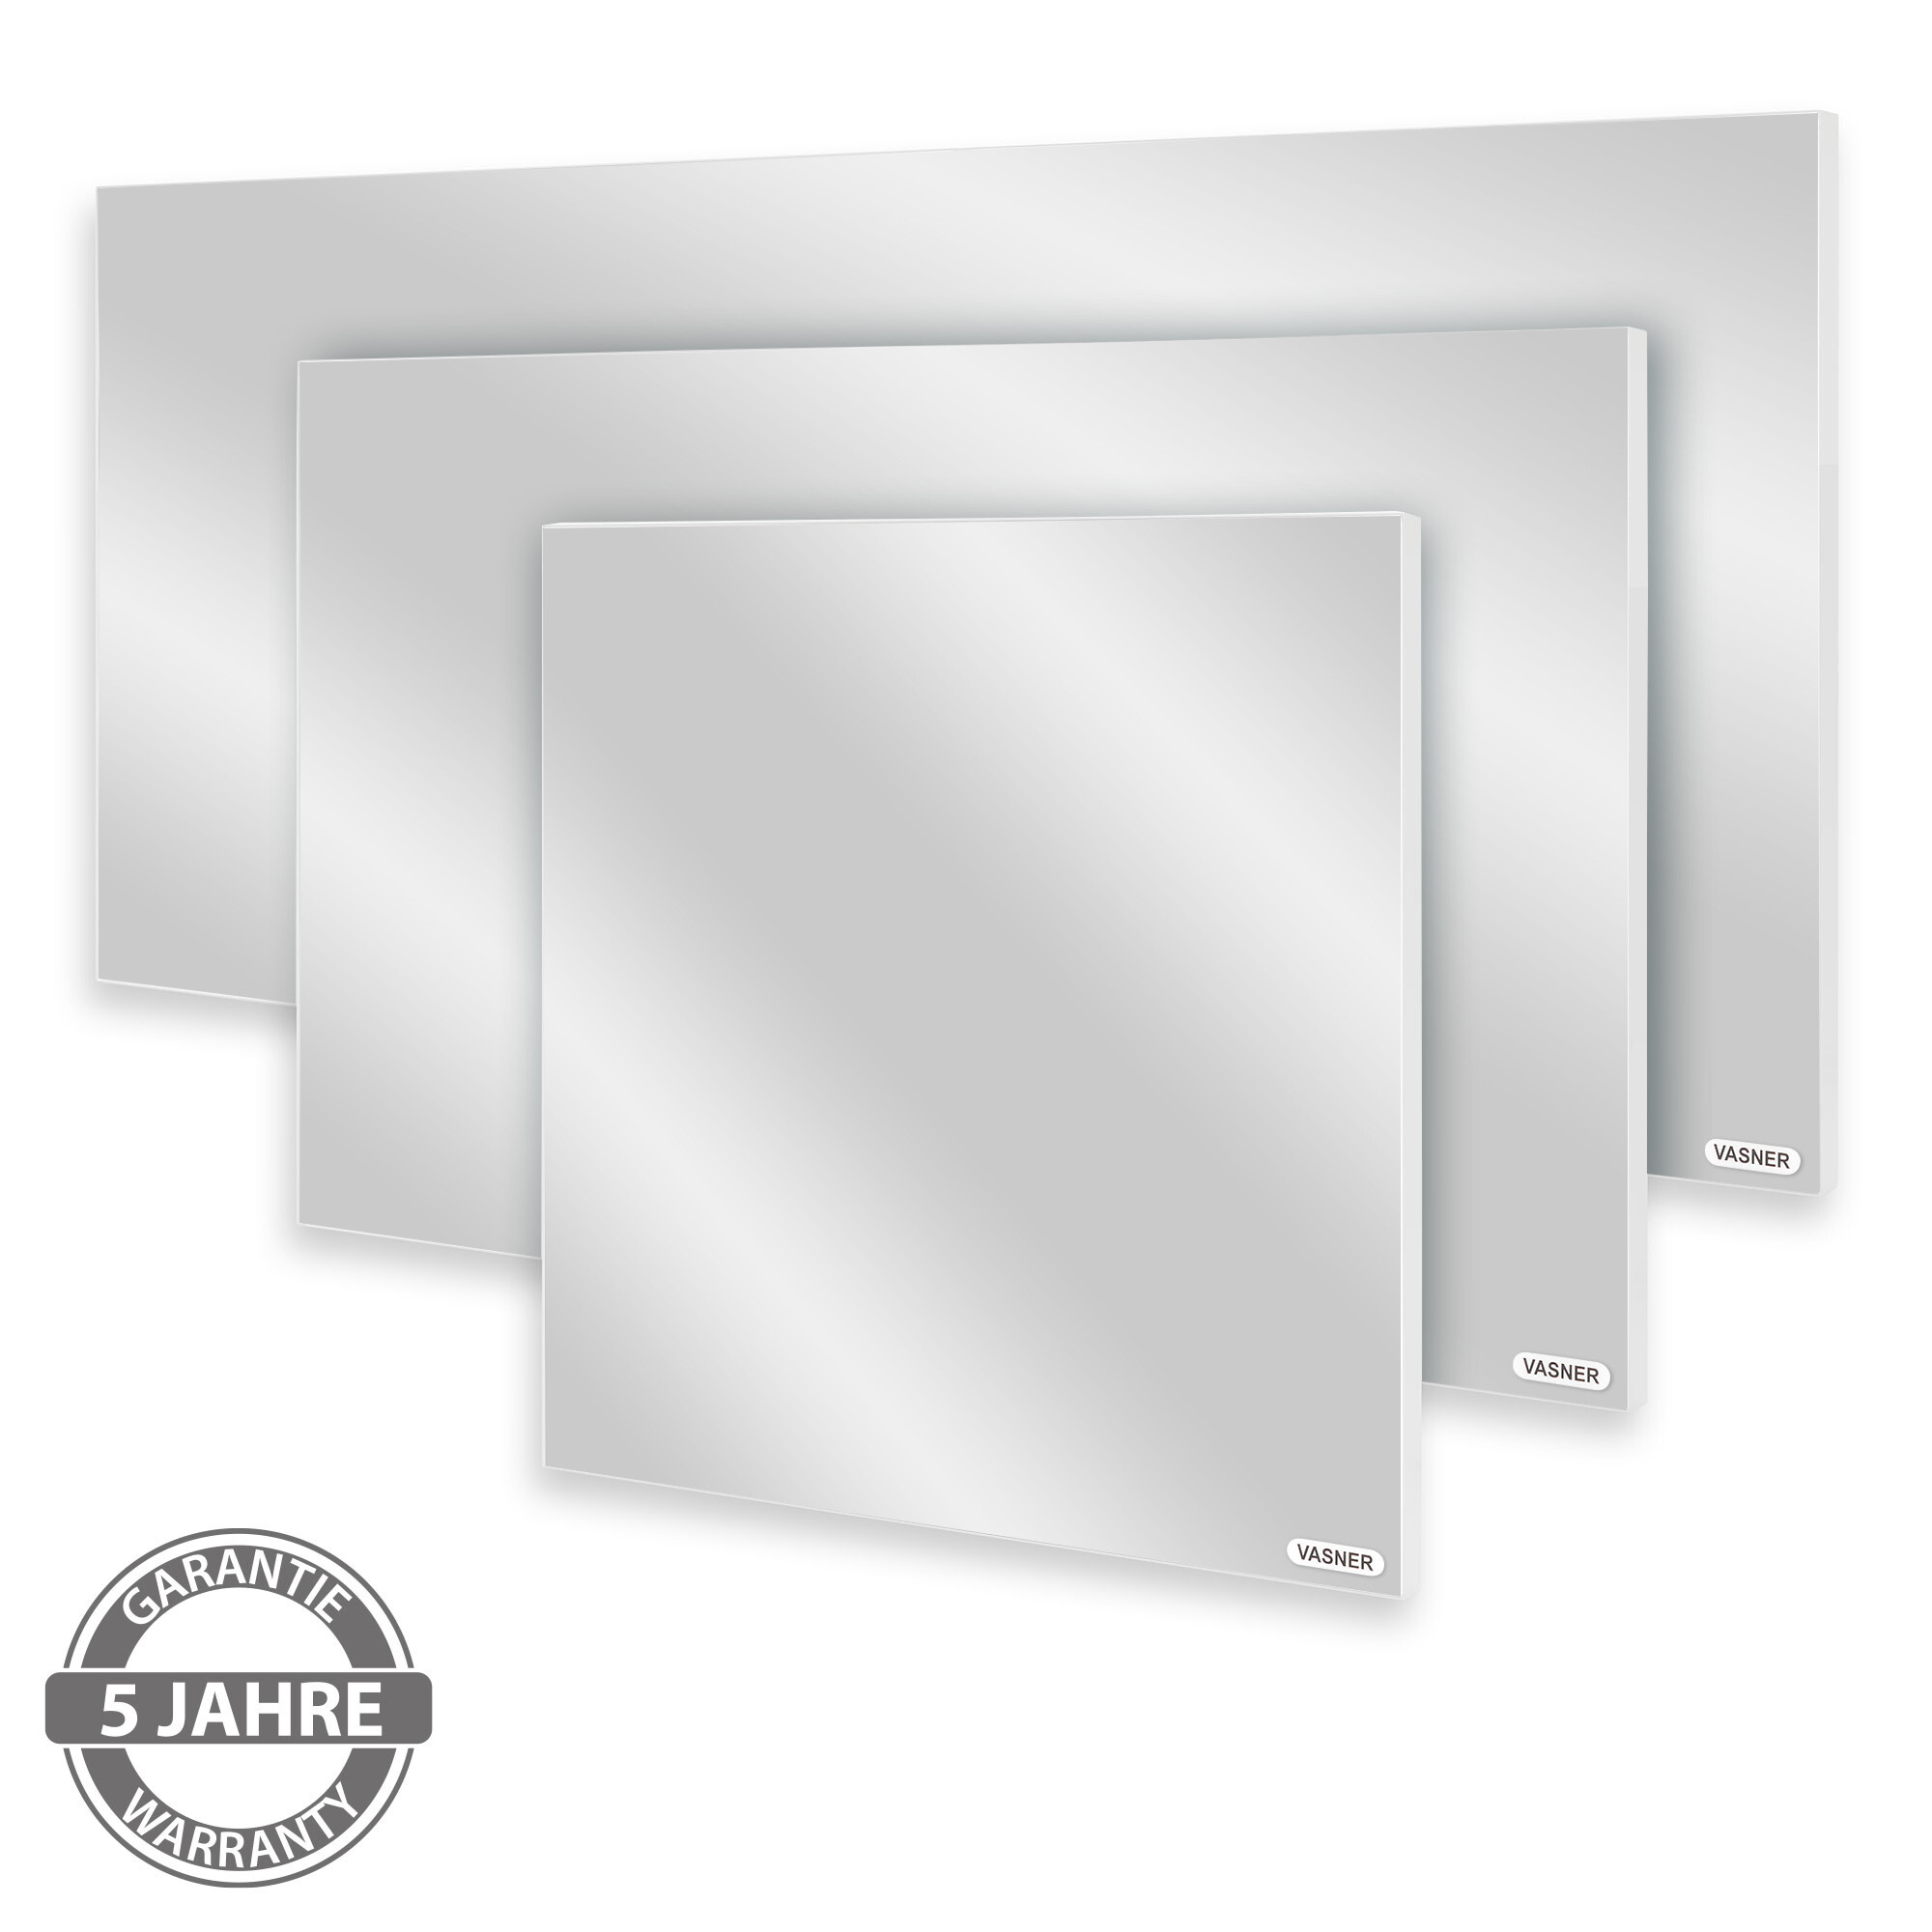 Mirror heating element with frame 300 - 900 watts, 5 year warranty